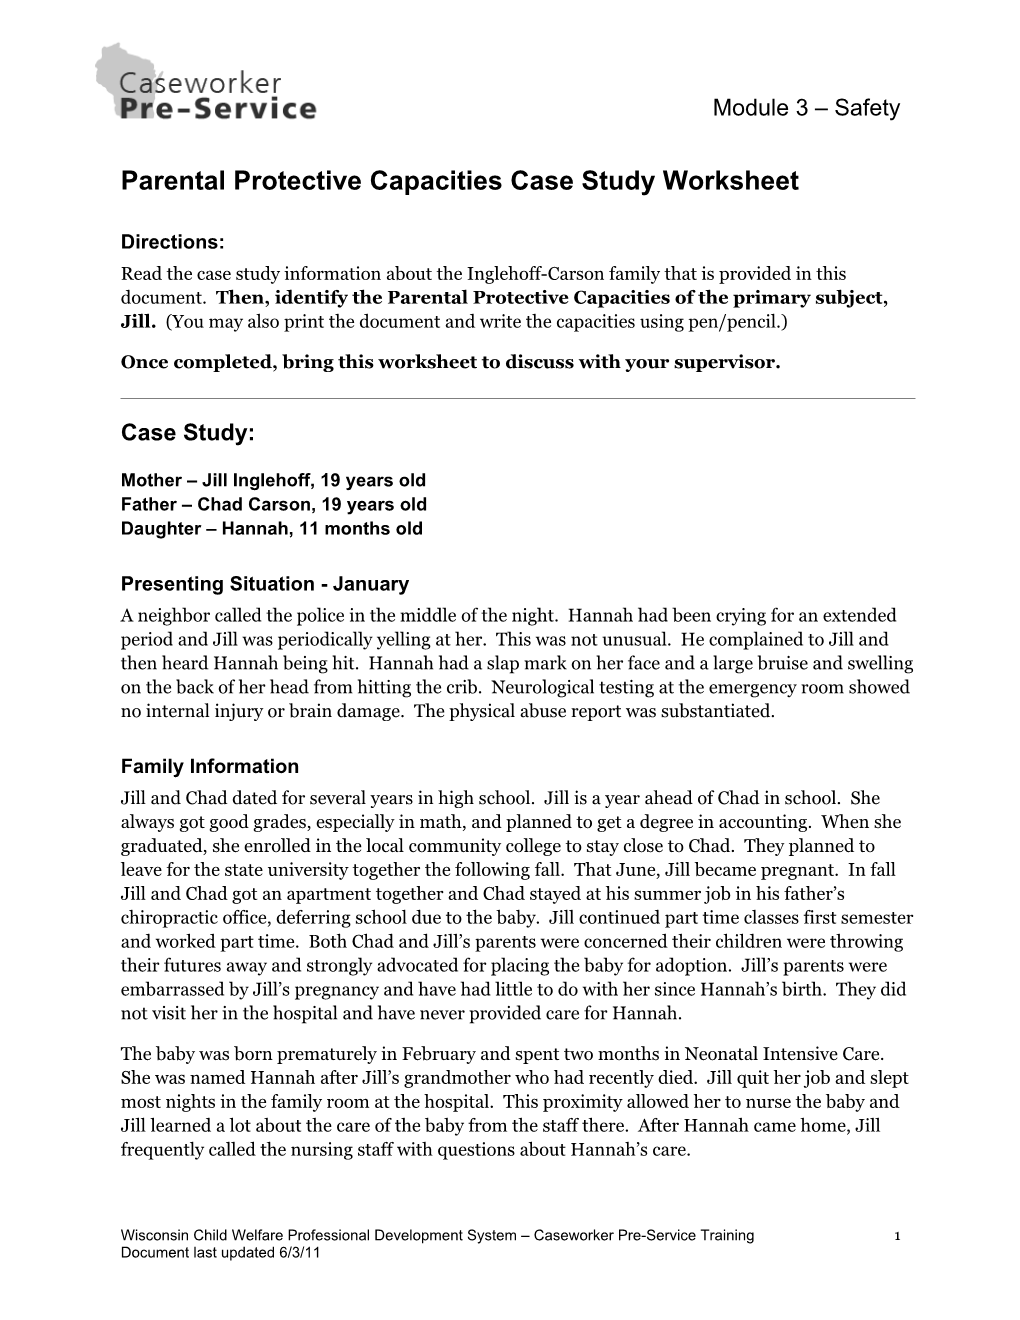 Parental Protective Capacities Case Study Worksheet